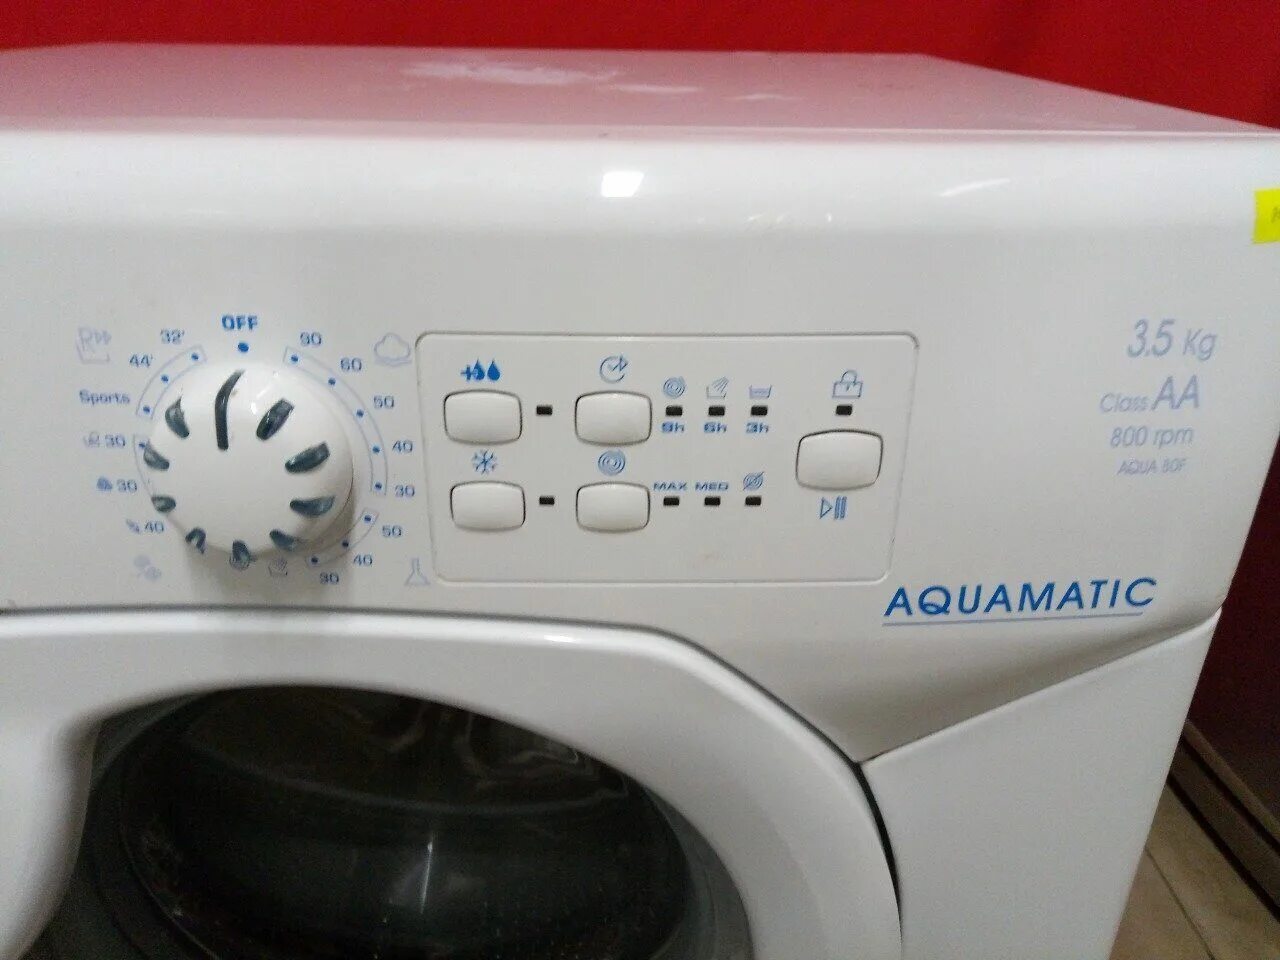 Канди акваматик 3.5. Канди акваматик 80f. Candy Aqua 80f. Aquamatic Aqua 80f стиральная машина. Стиральная машина Candy Aquamatic 80 f.